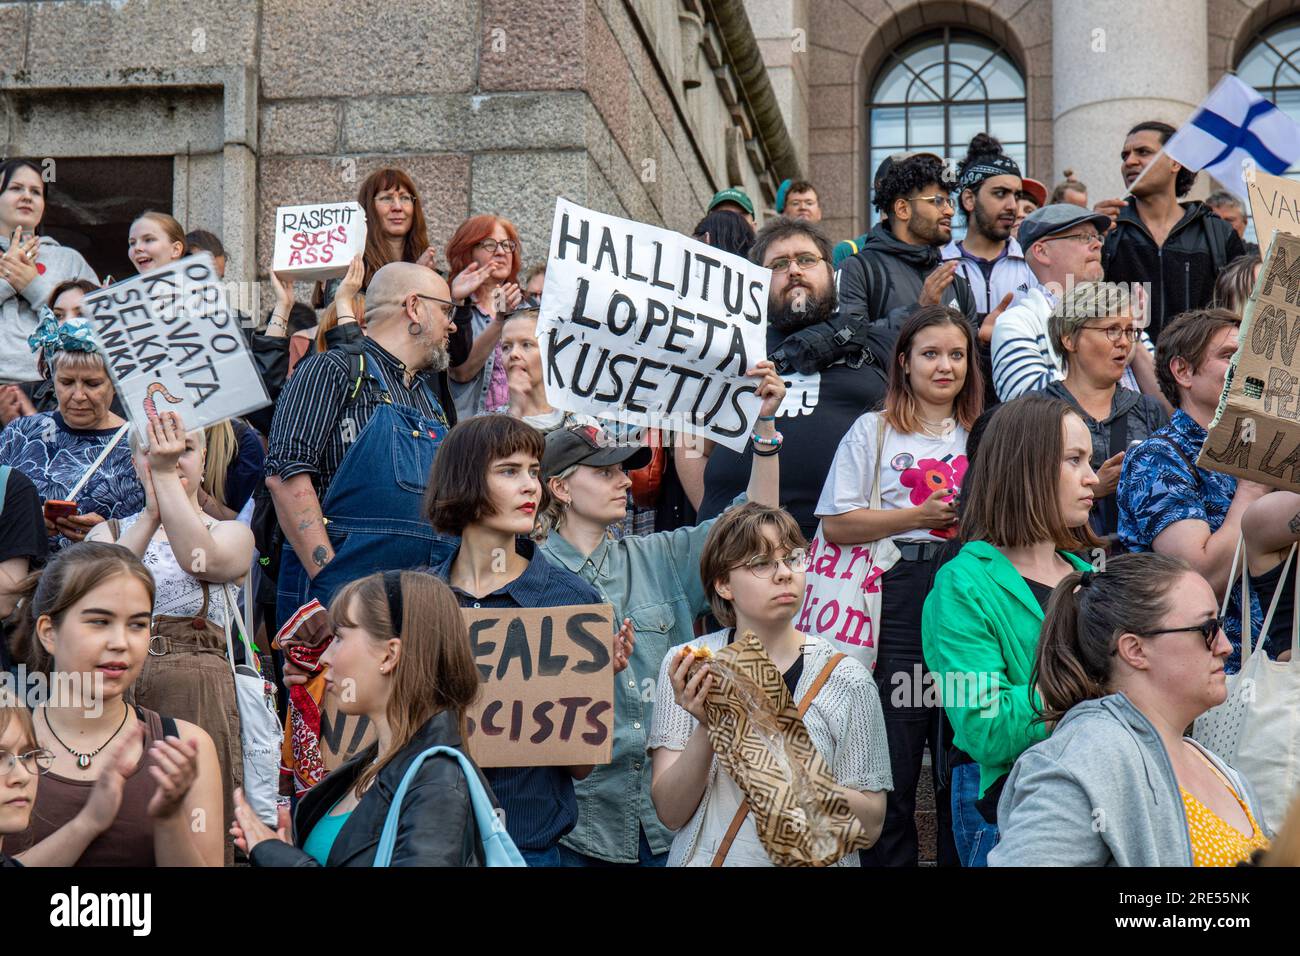 Protesters holding handmade signs on Parliament House steps at Nollatoleranssi! Rasistit ulos hallituksesta demonstration in Helsinki, Finland Stock Photo